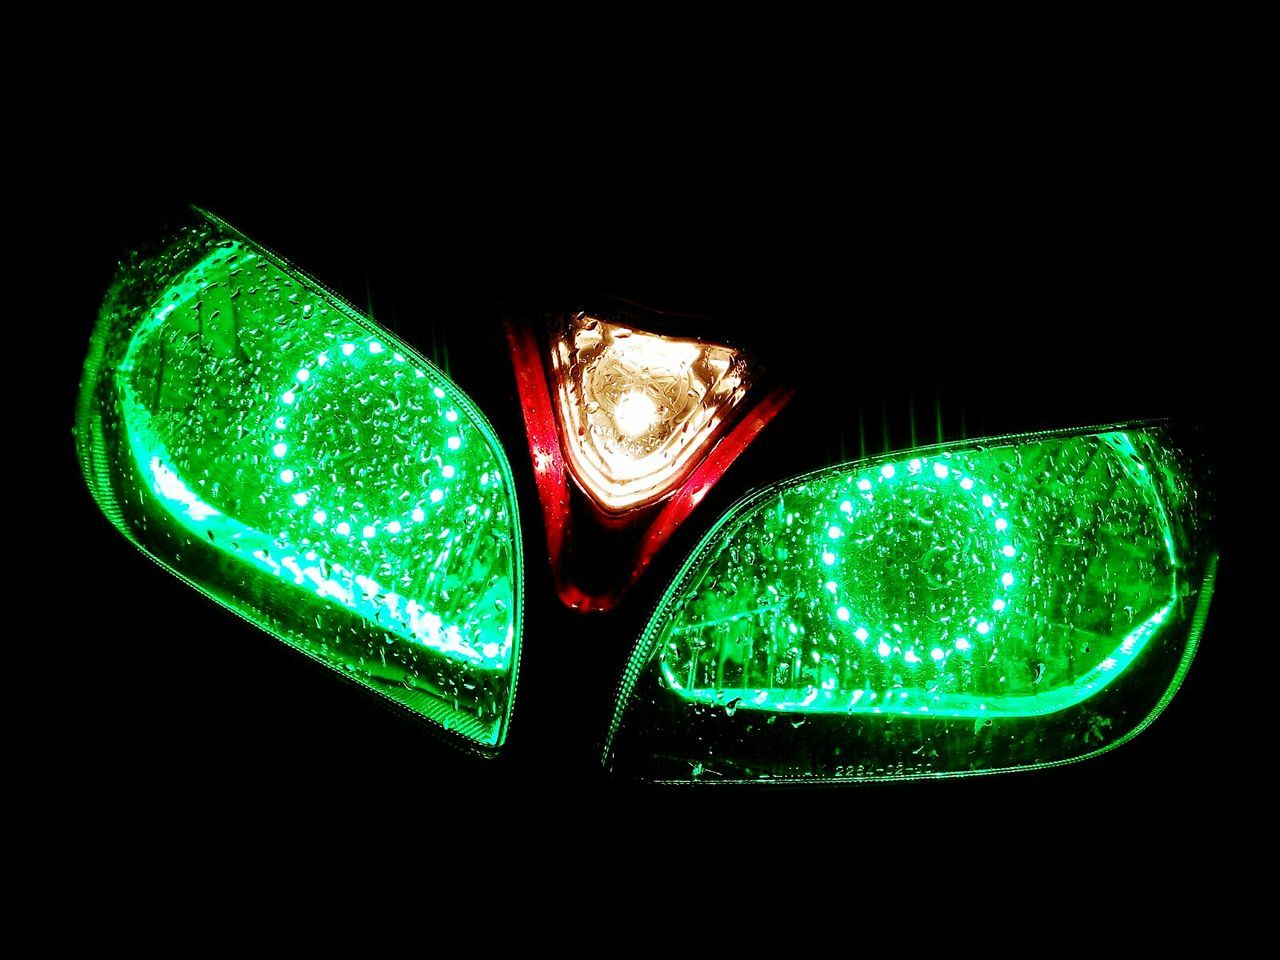 Close-up of illuminated motorcycle headlights